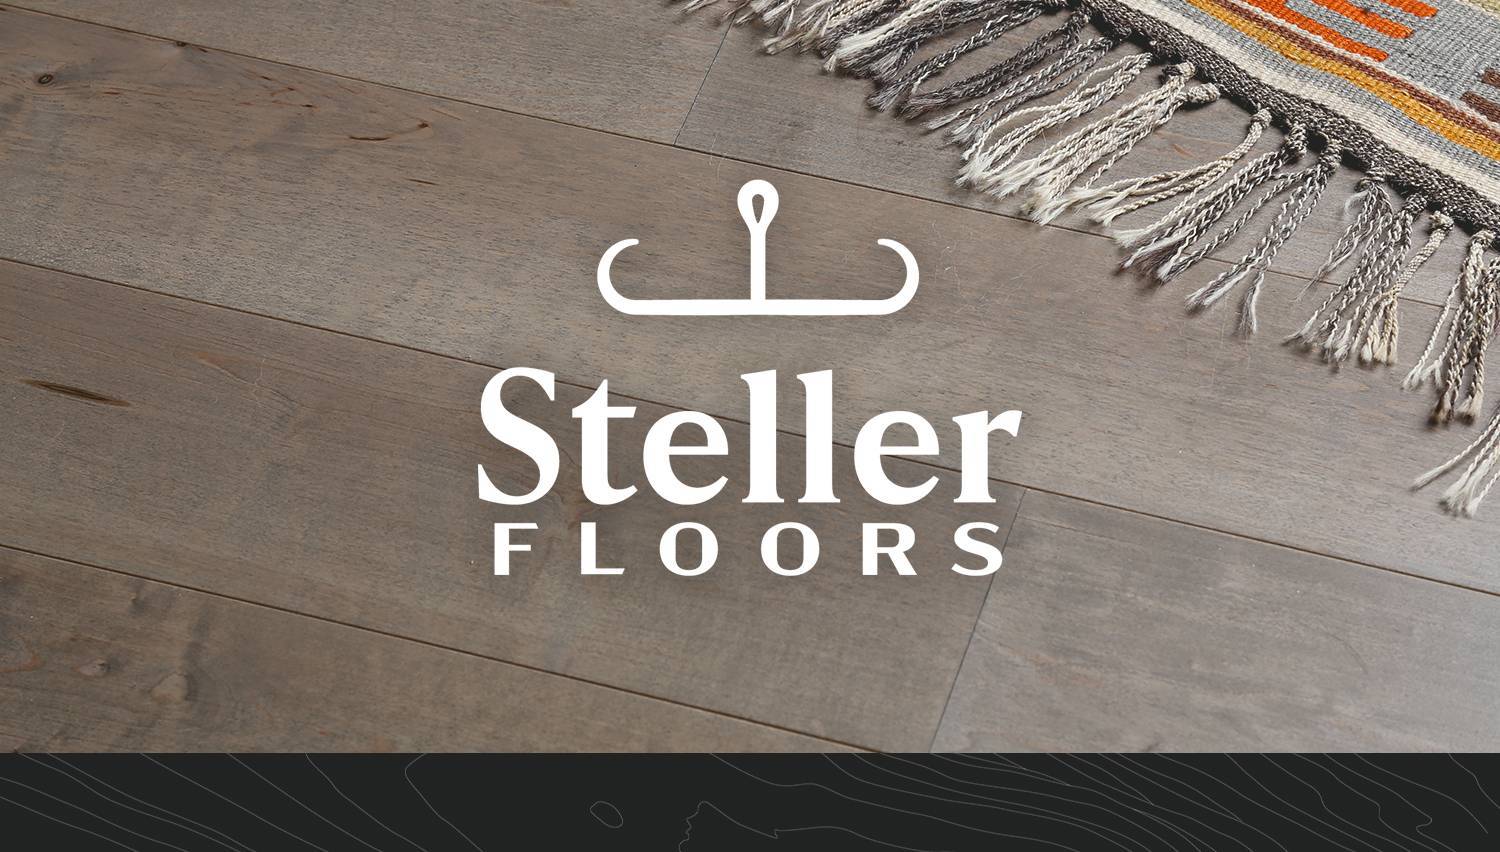 Steller Floors new client welcome